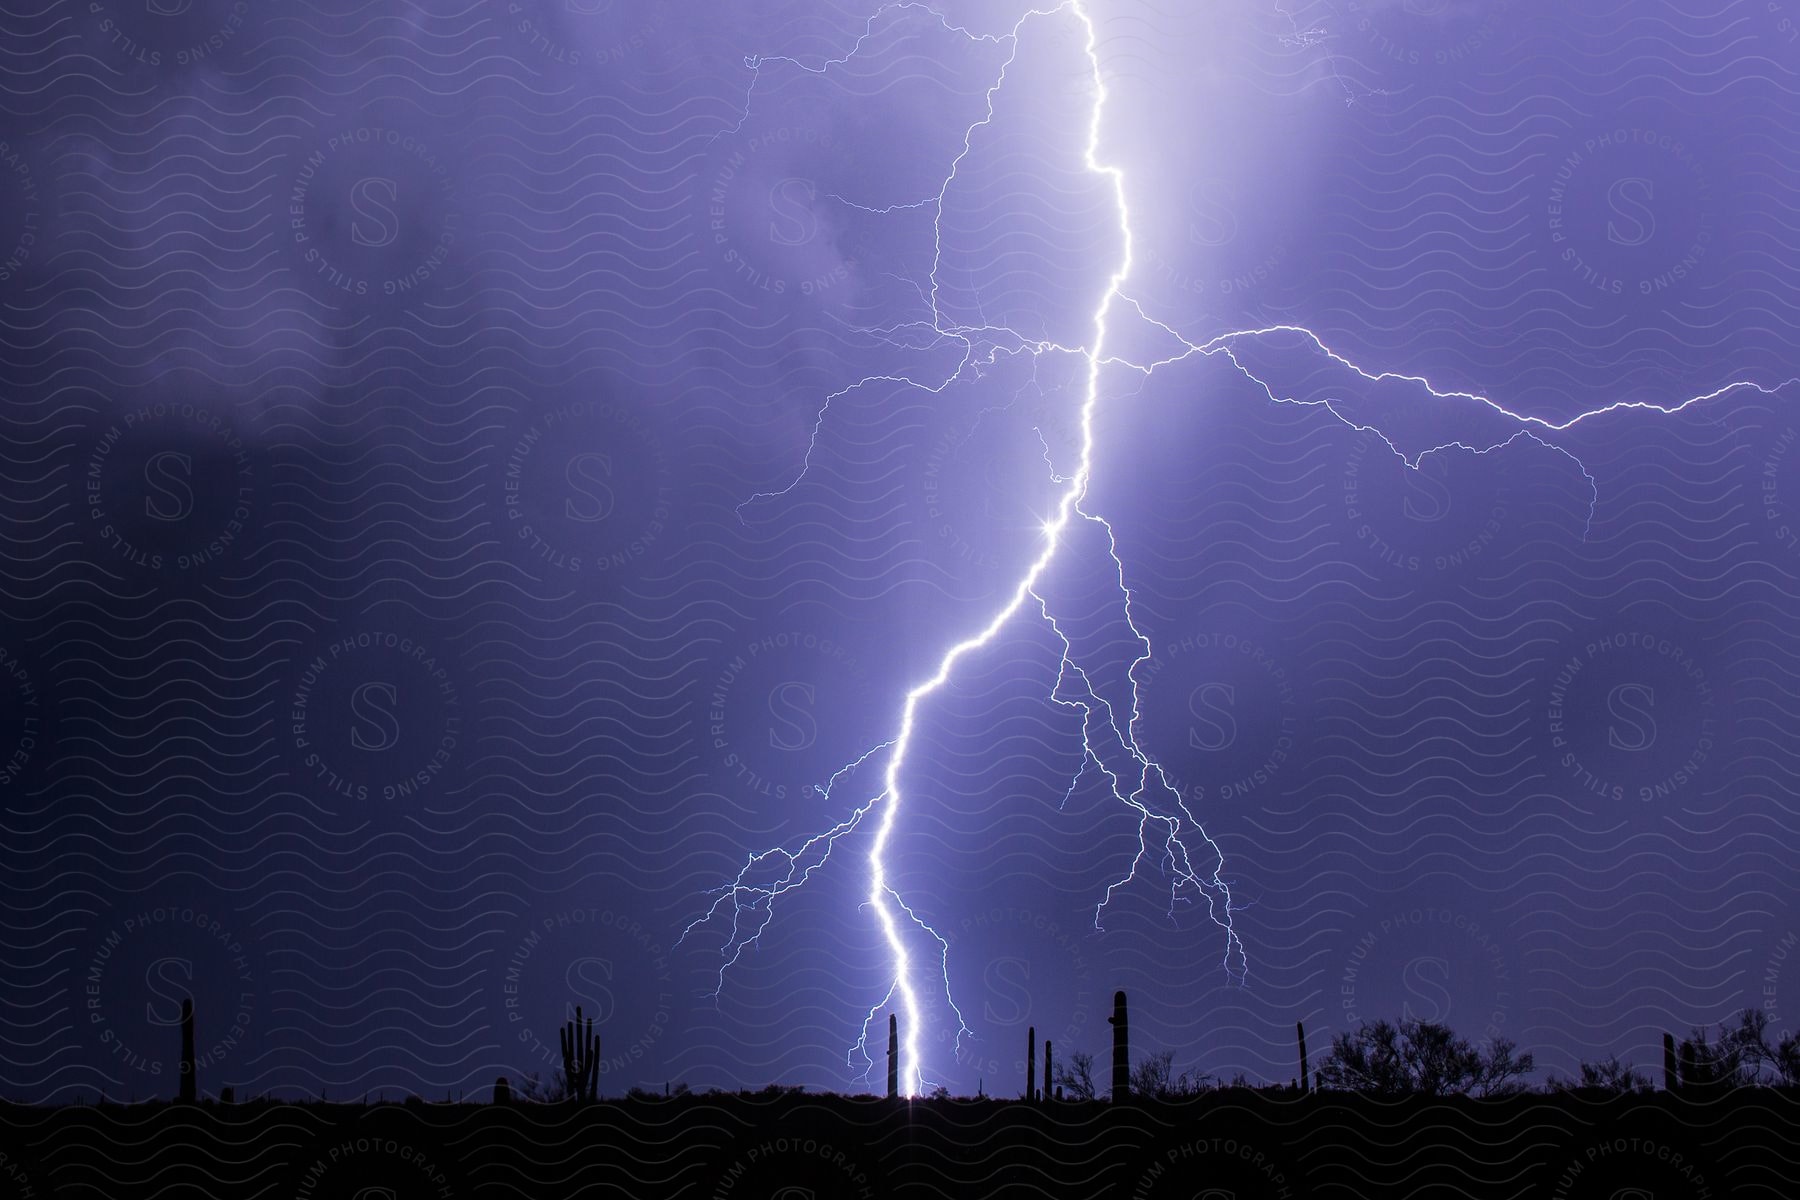 A bright lightning bolt strikes the desert ground illuminating the night sky